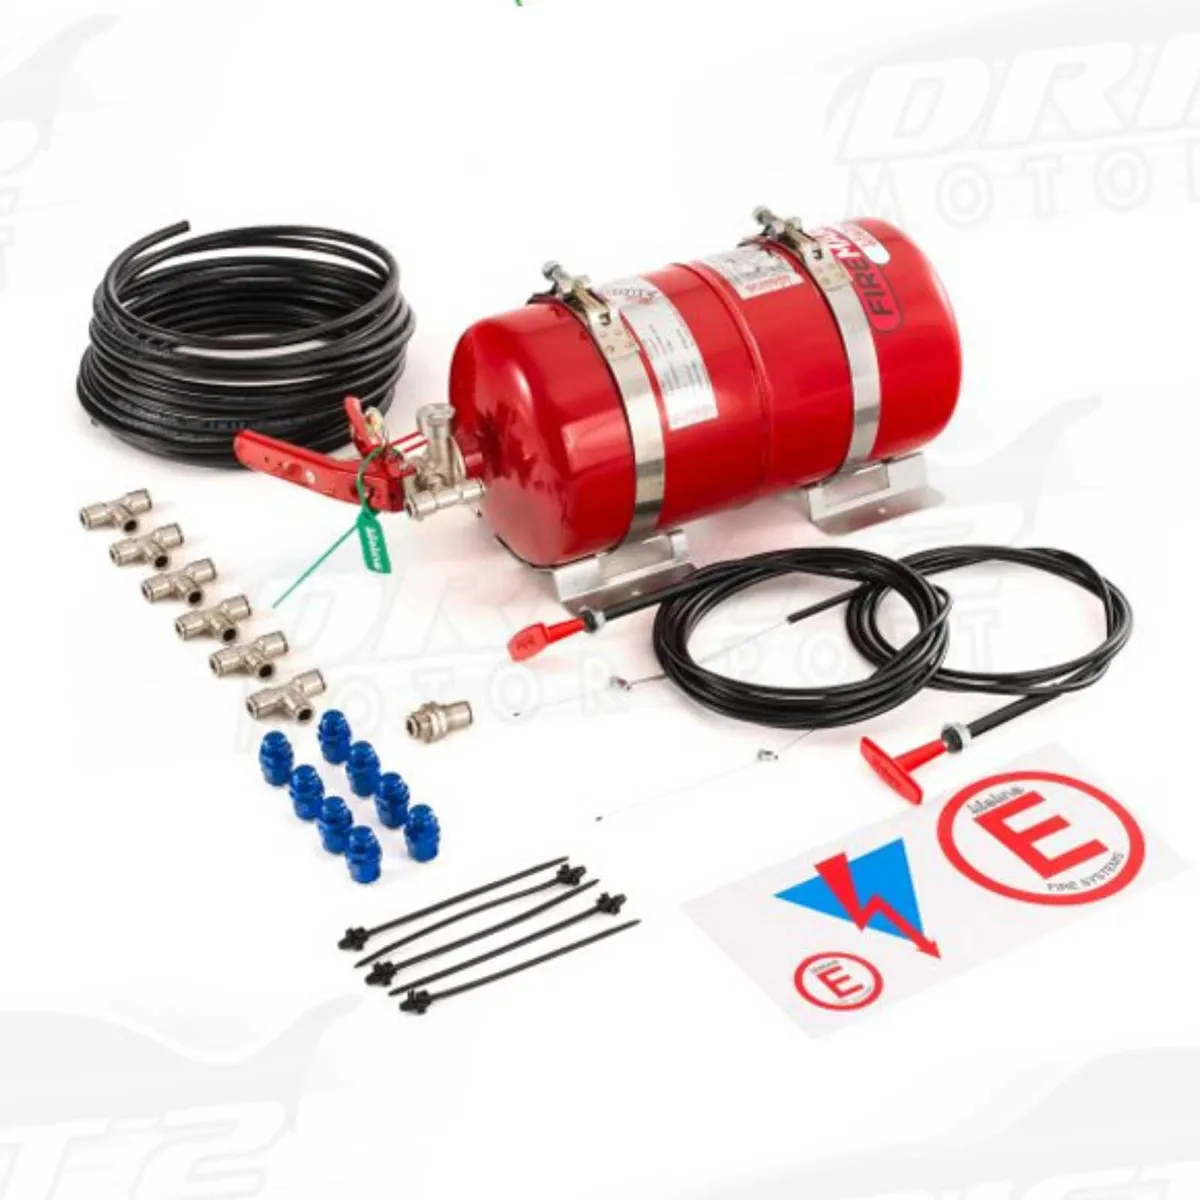 Motorsport Safety Equipment - Drift2Motorsport - Image 1